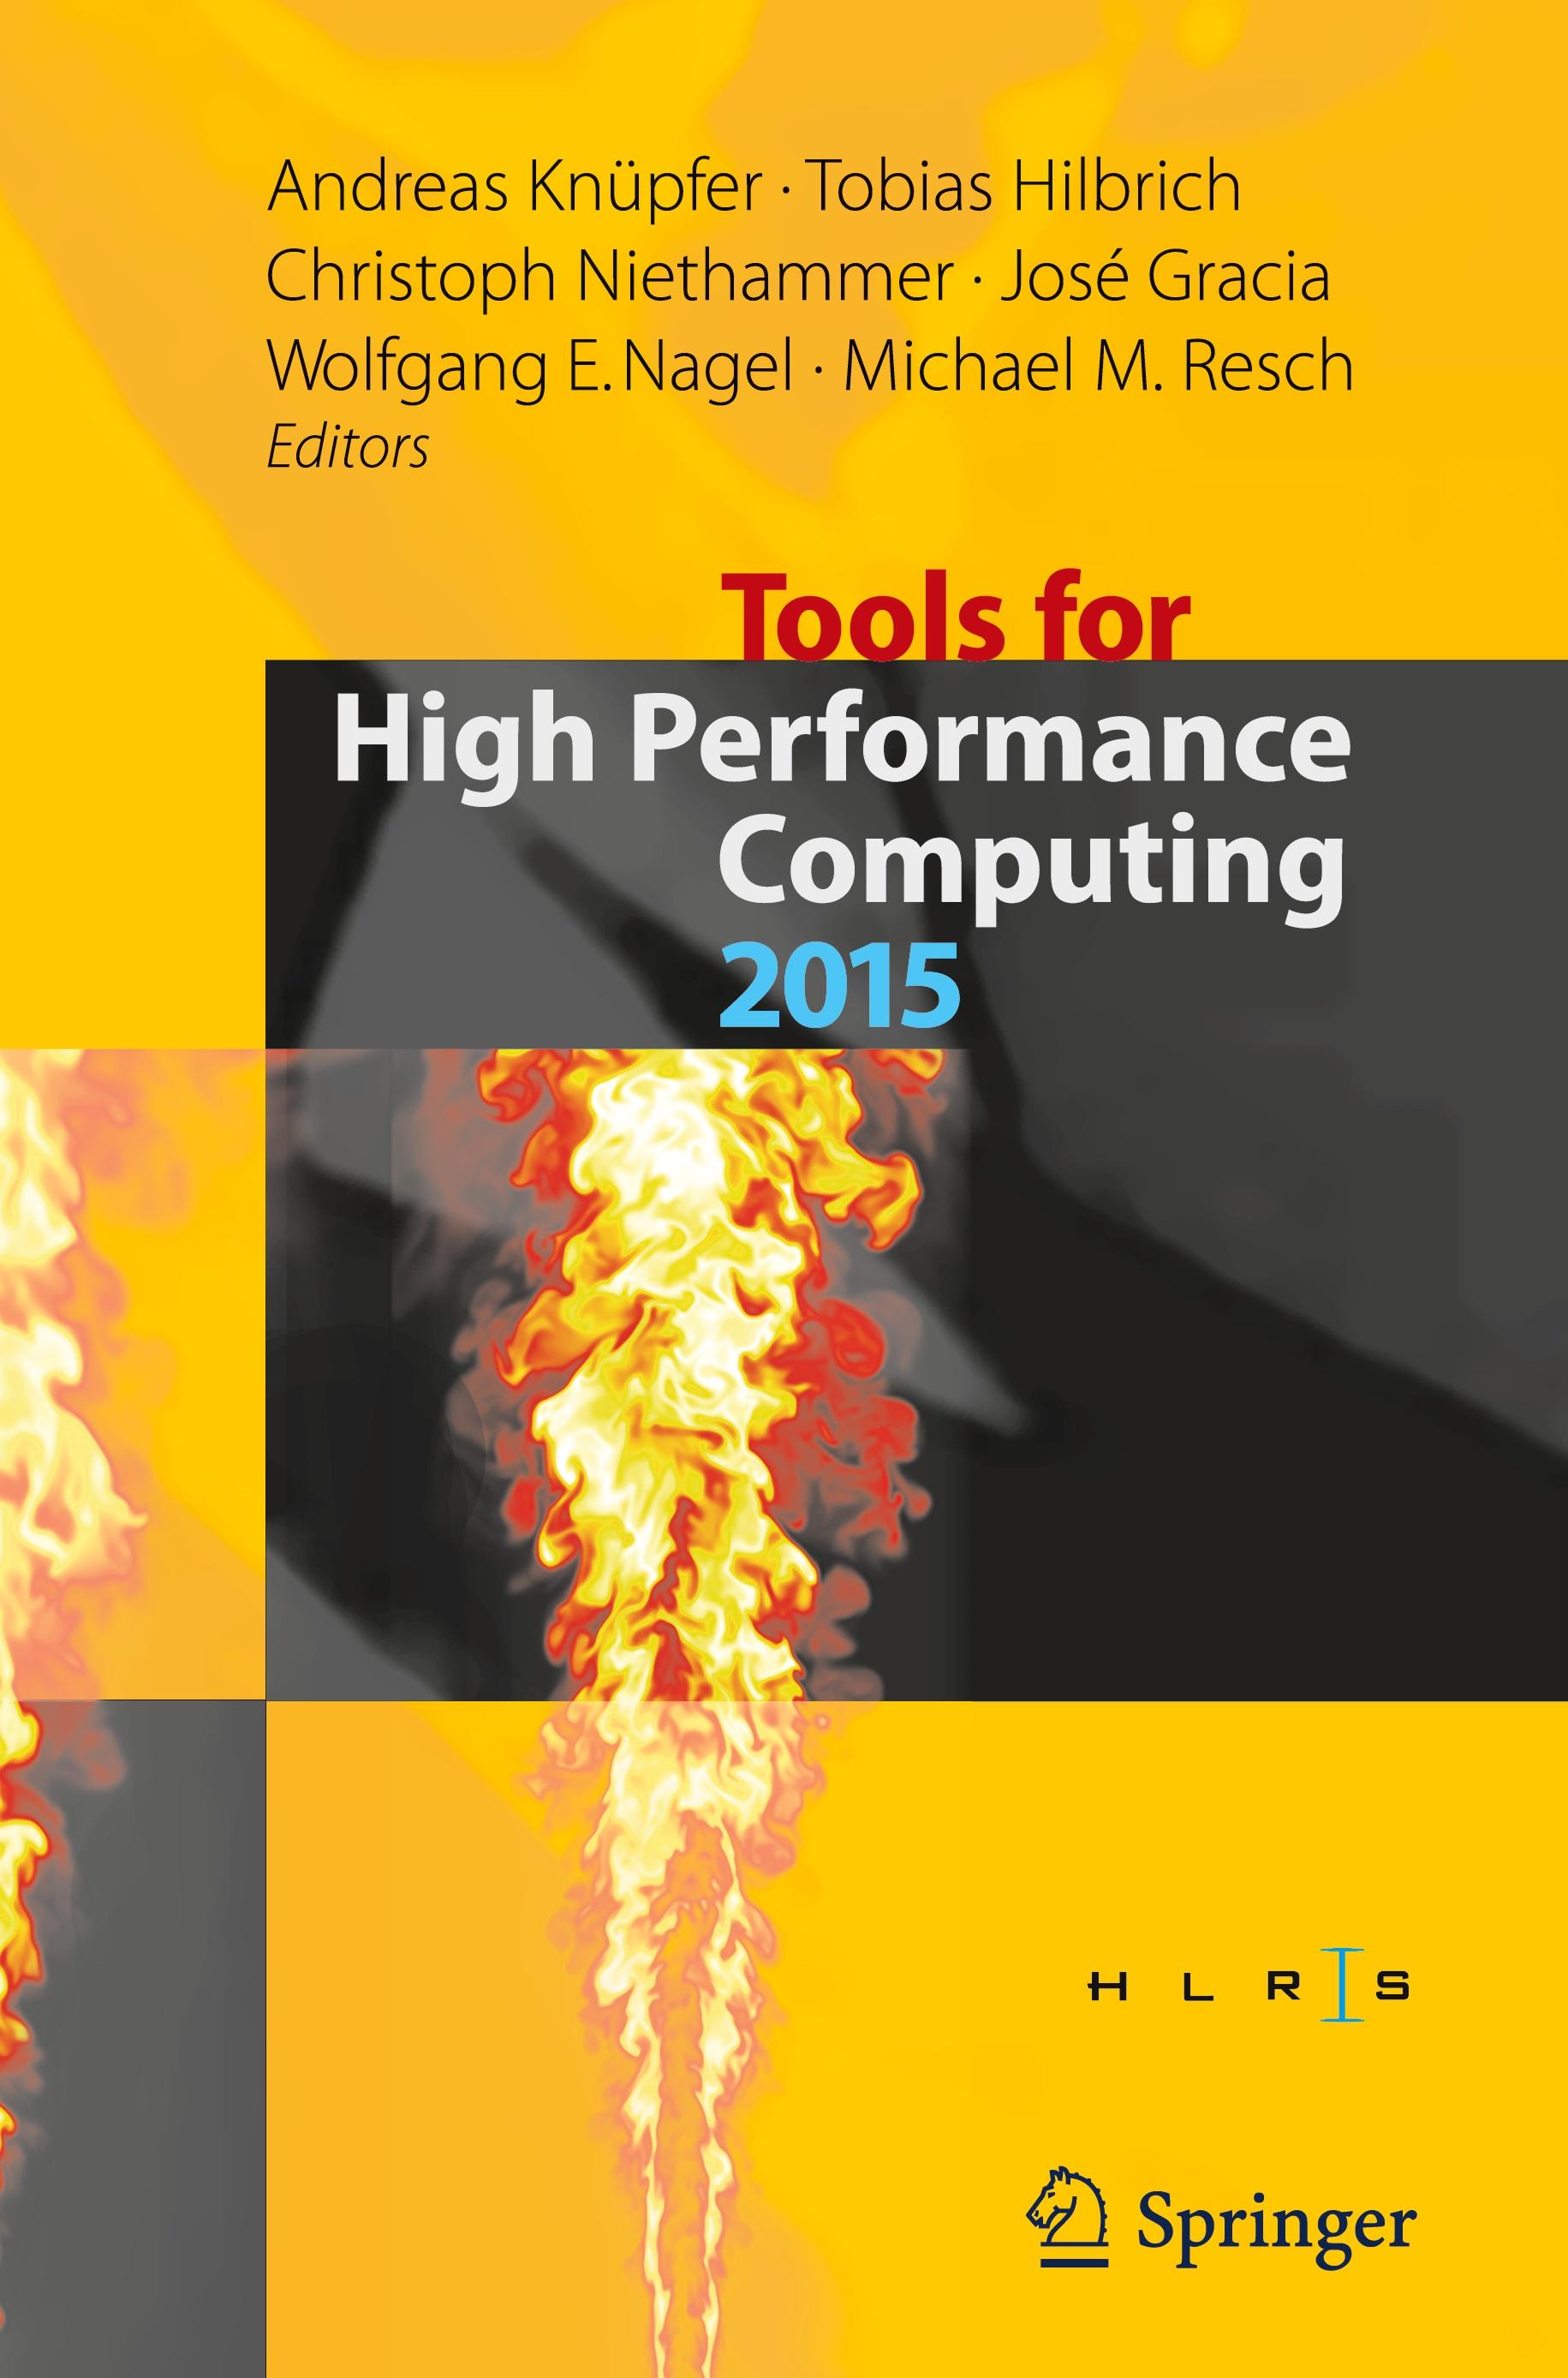 Tools for High Performance Computing 2015 - KnÃ¼pfer, Andreas|Hilbrich, Tobias|Niethammer, Christoph|Gracia, JosÃ©|Nagel, Wolfgang E.|Resch, Michael M.